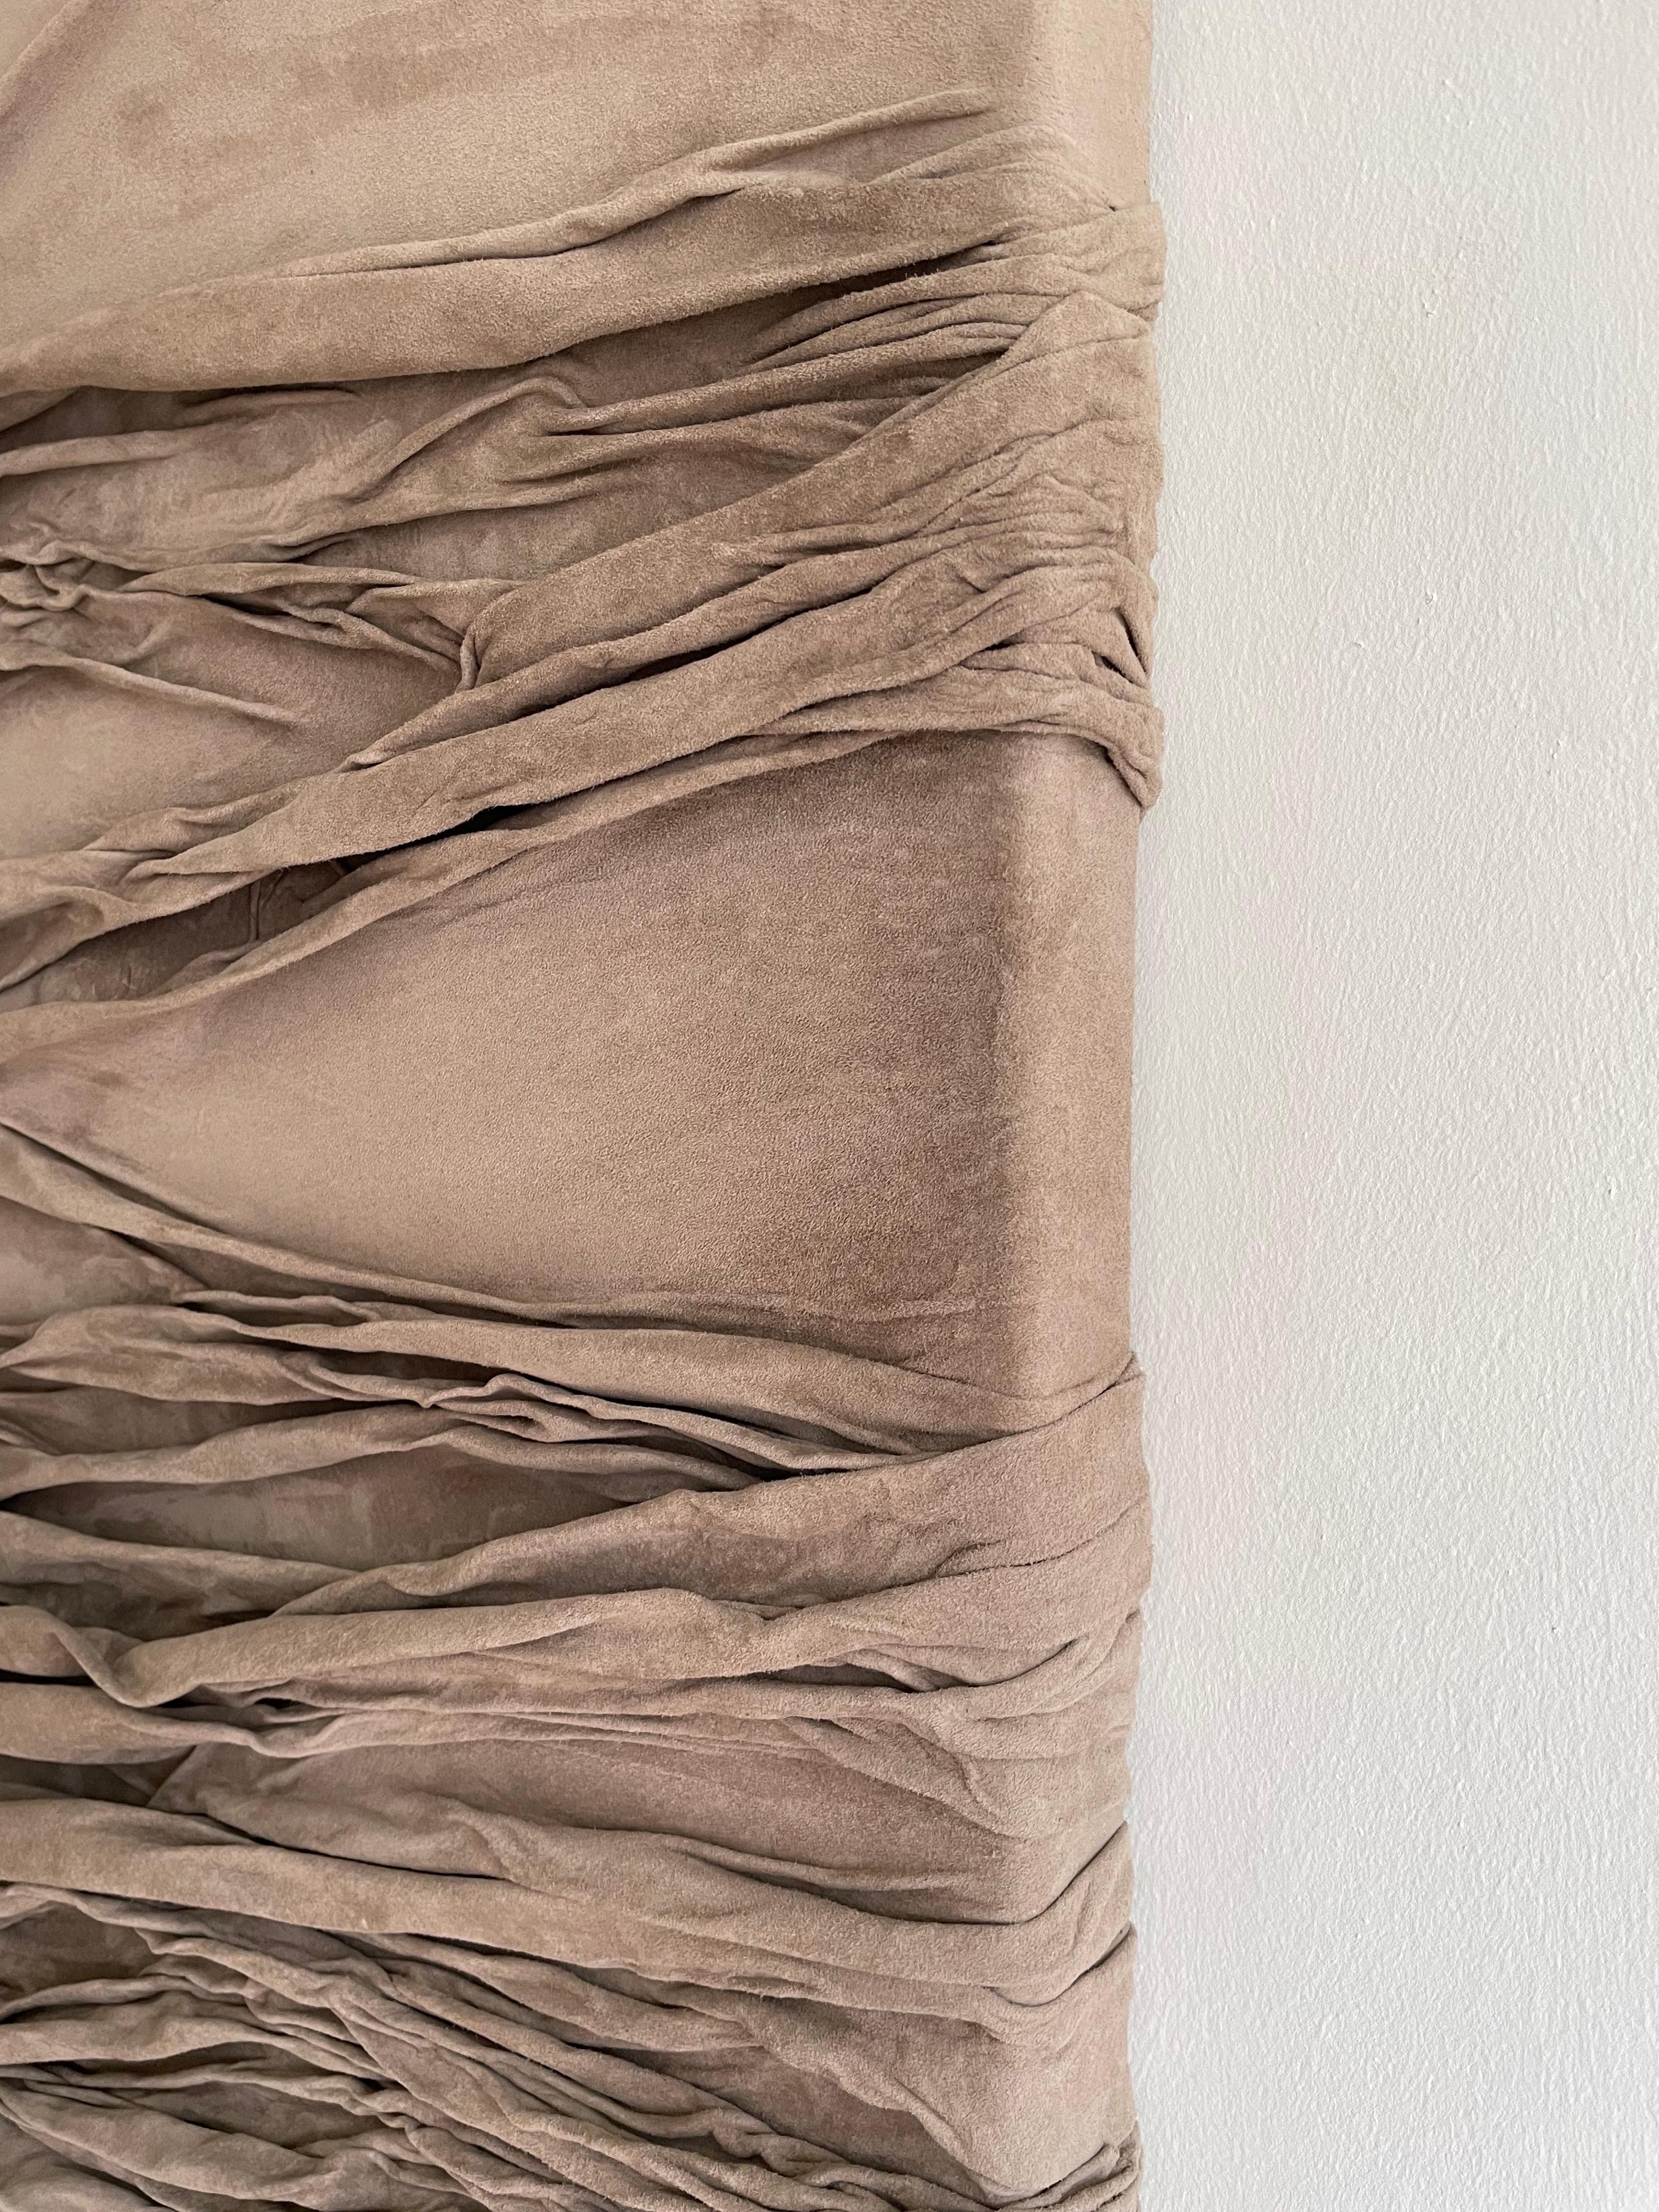 Contemporary Feminine Leather Draped Relief Artwork By Danish Benedicte Pedersen For Sale 3